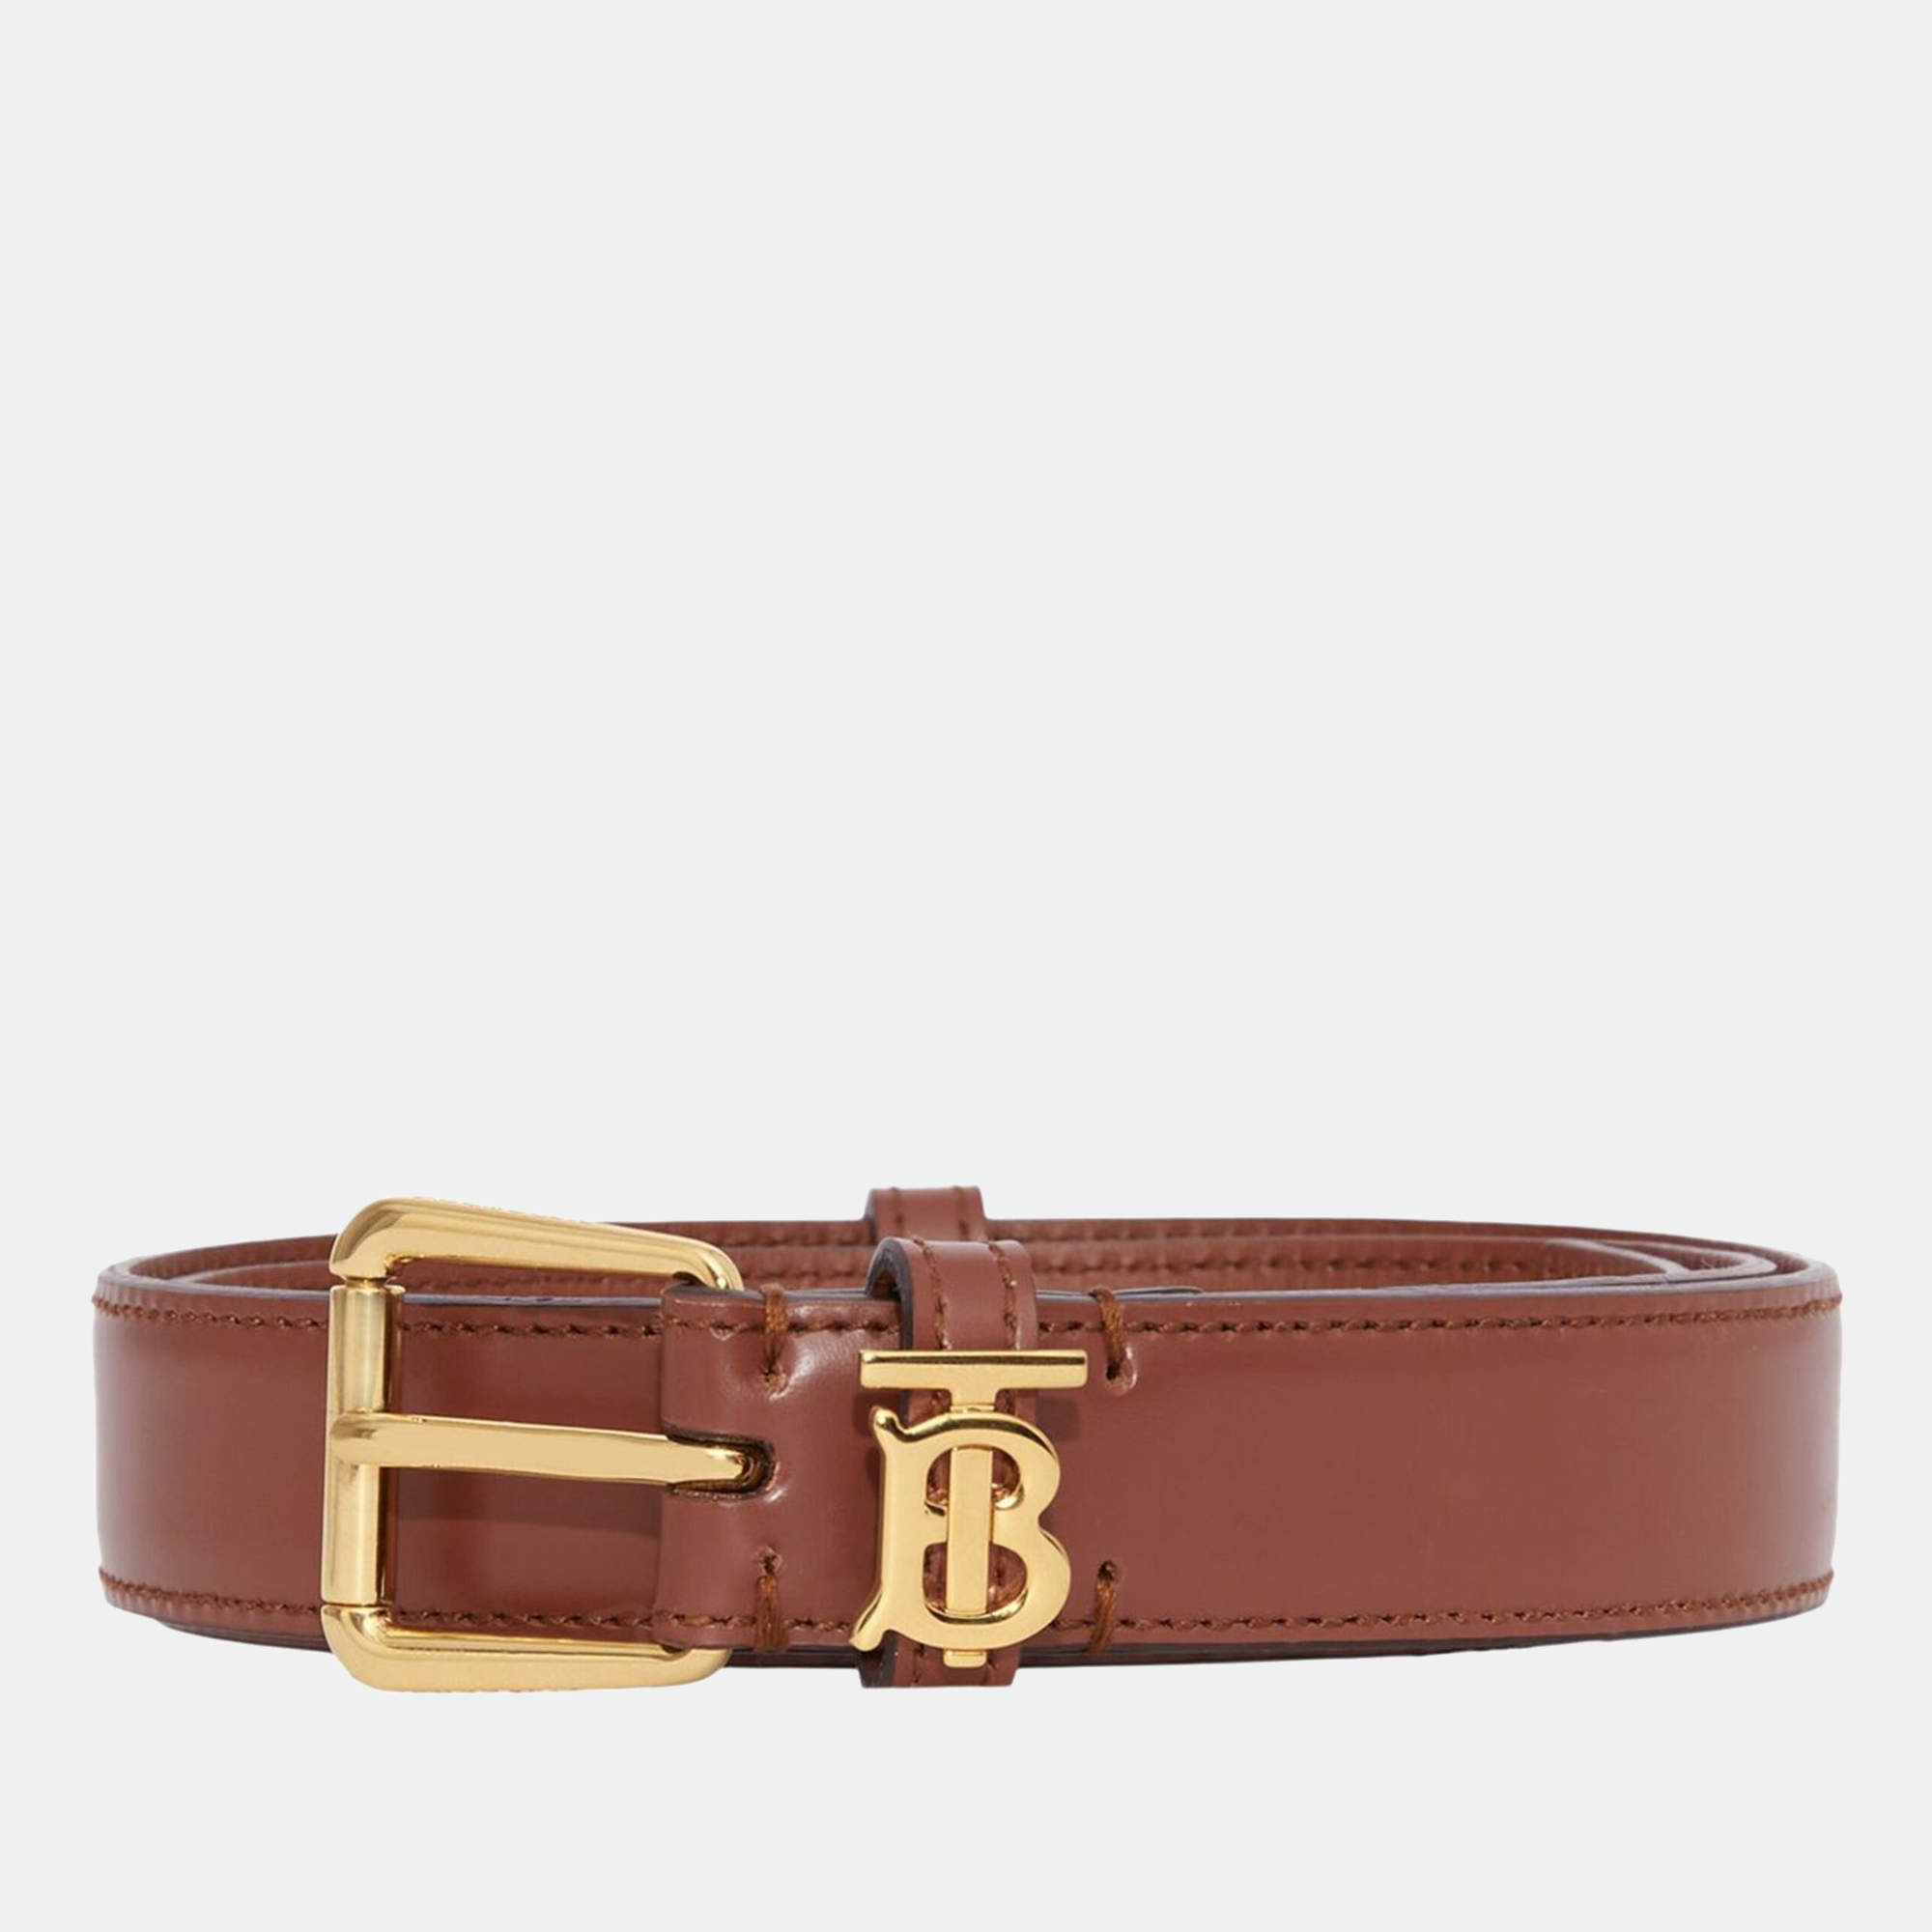 Burberry Tan Leather TB Belt M Burberry